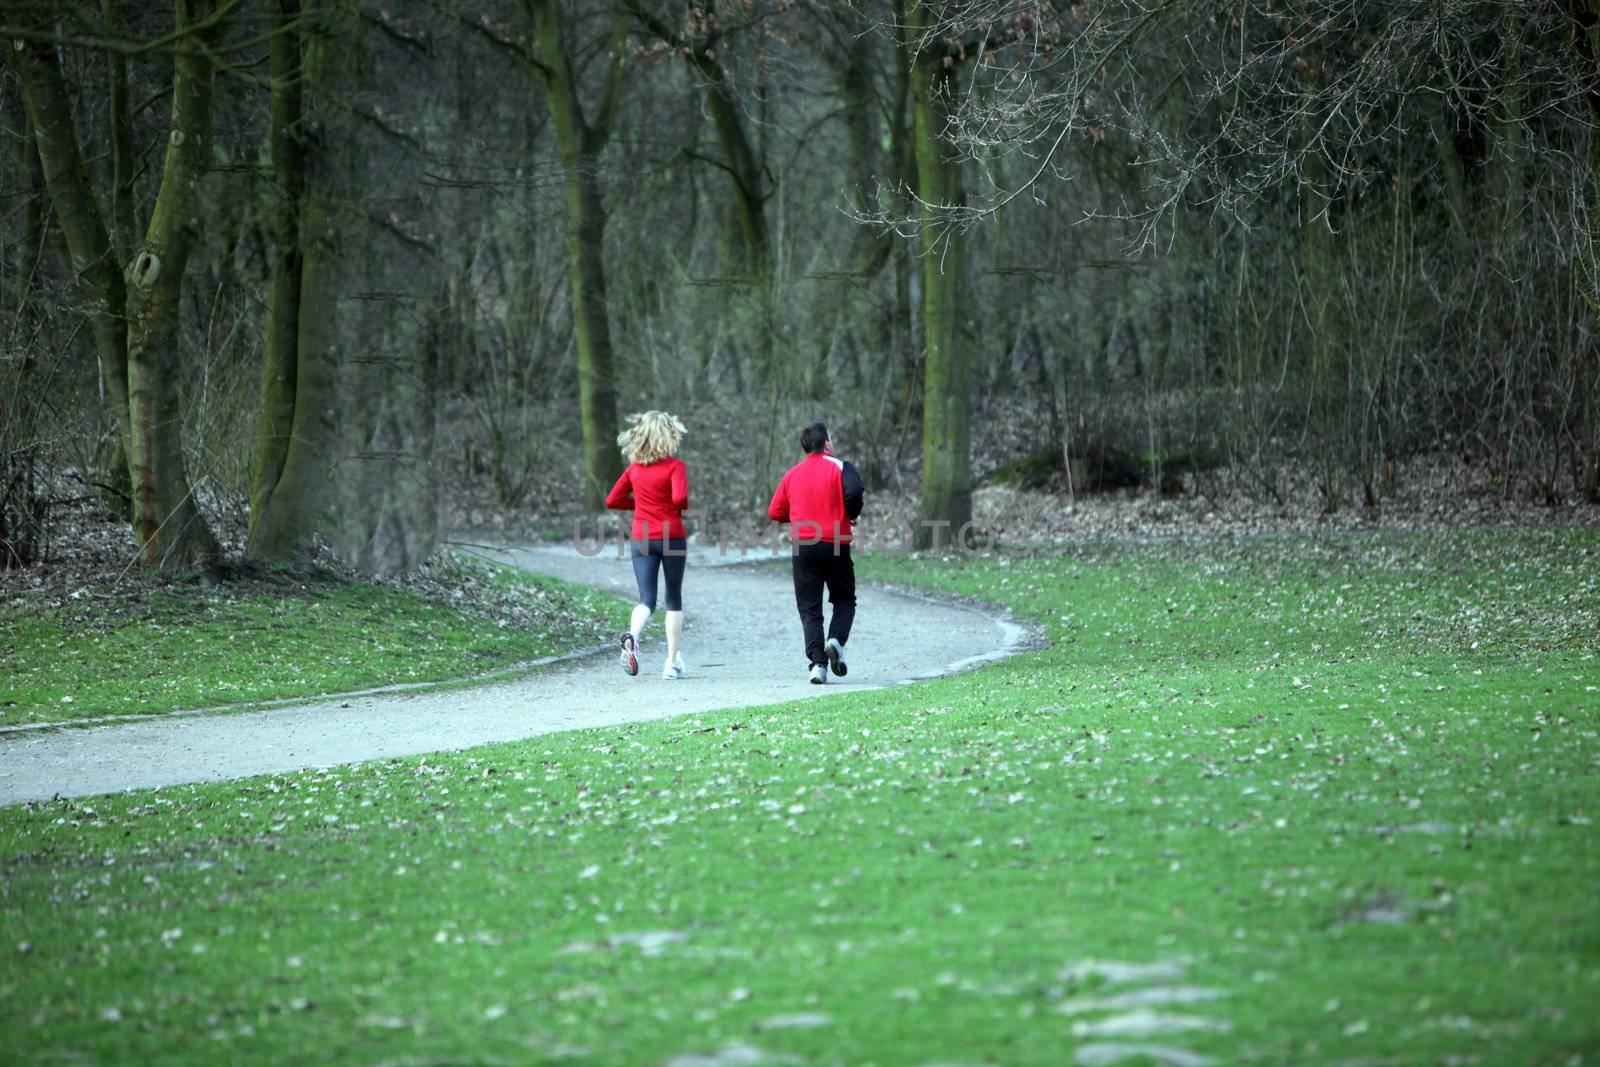 Two joggers - men and women in red sportswear